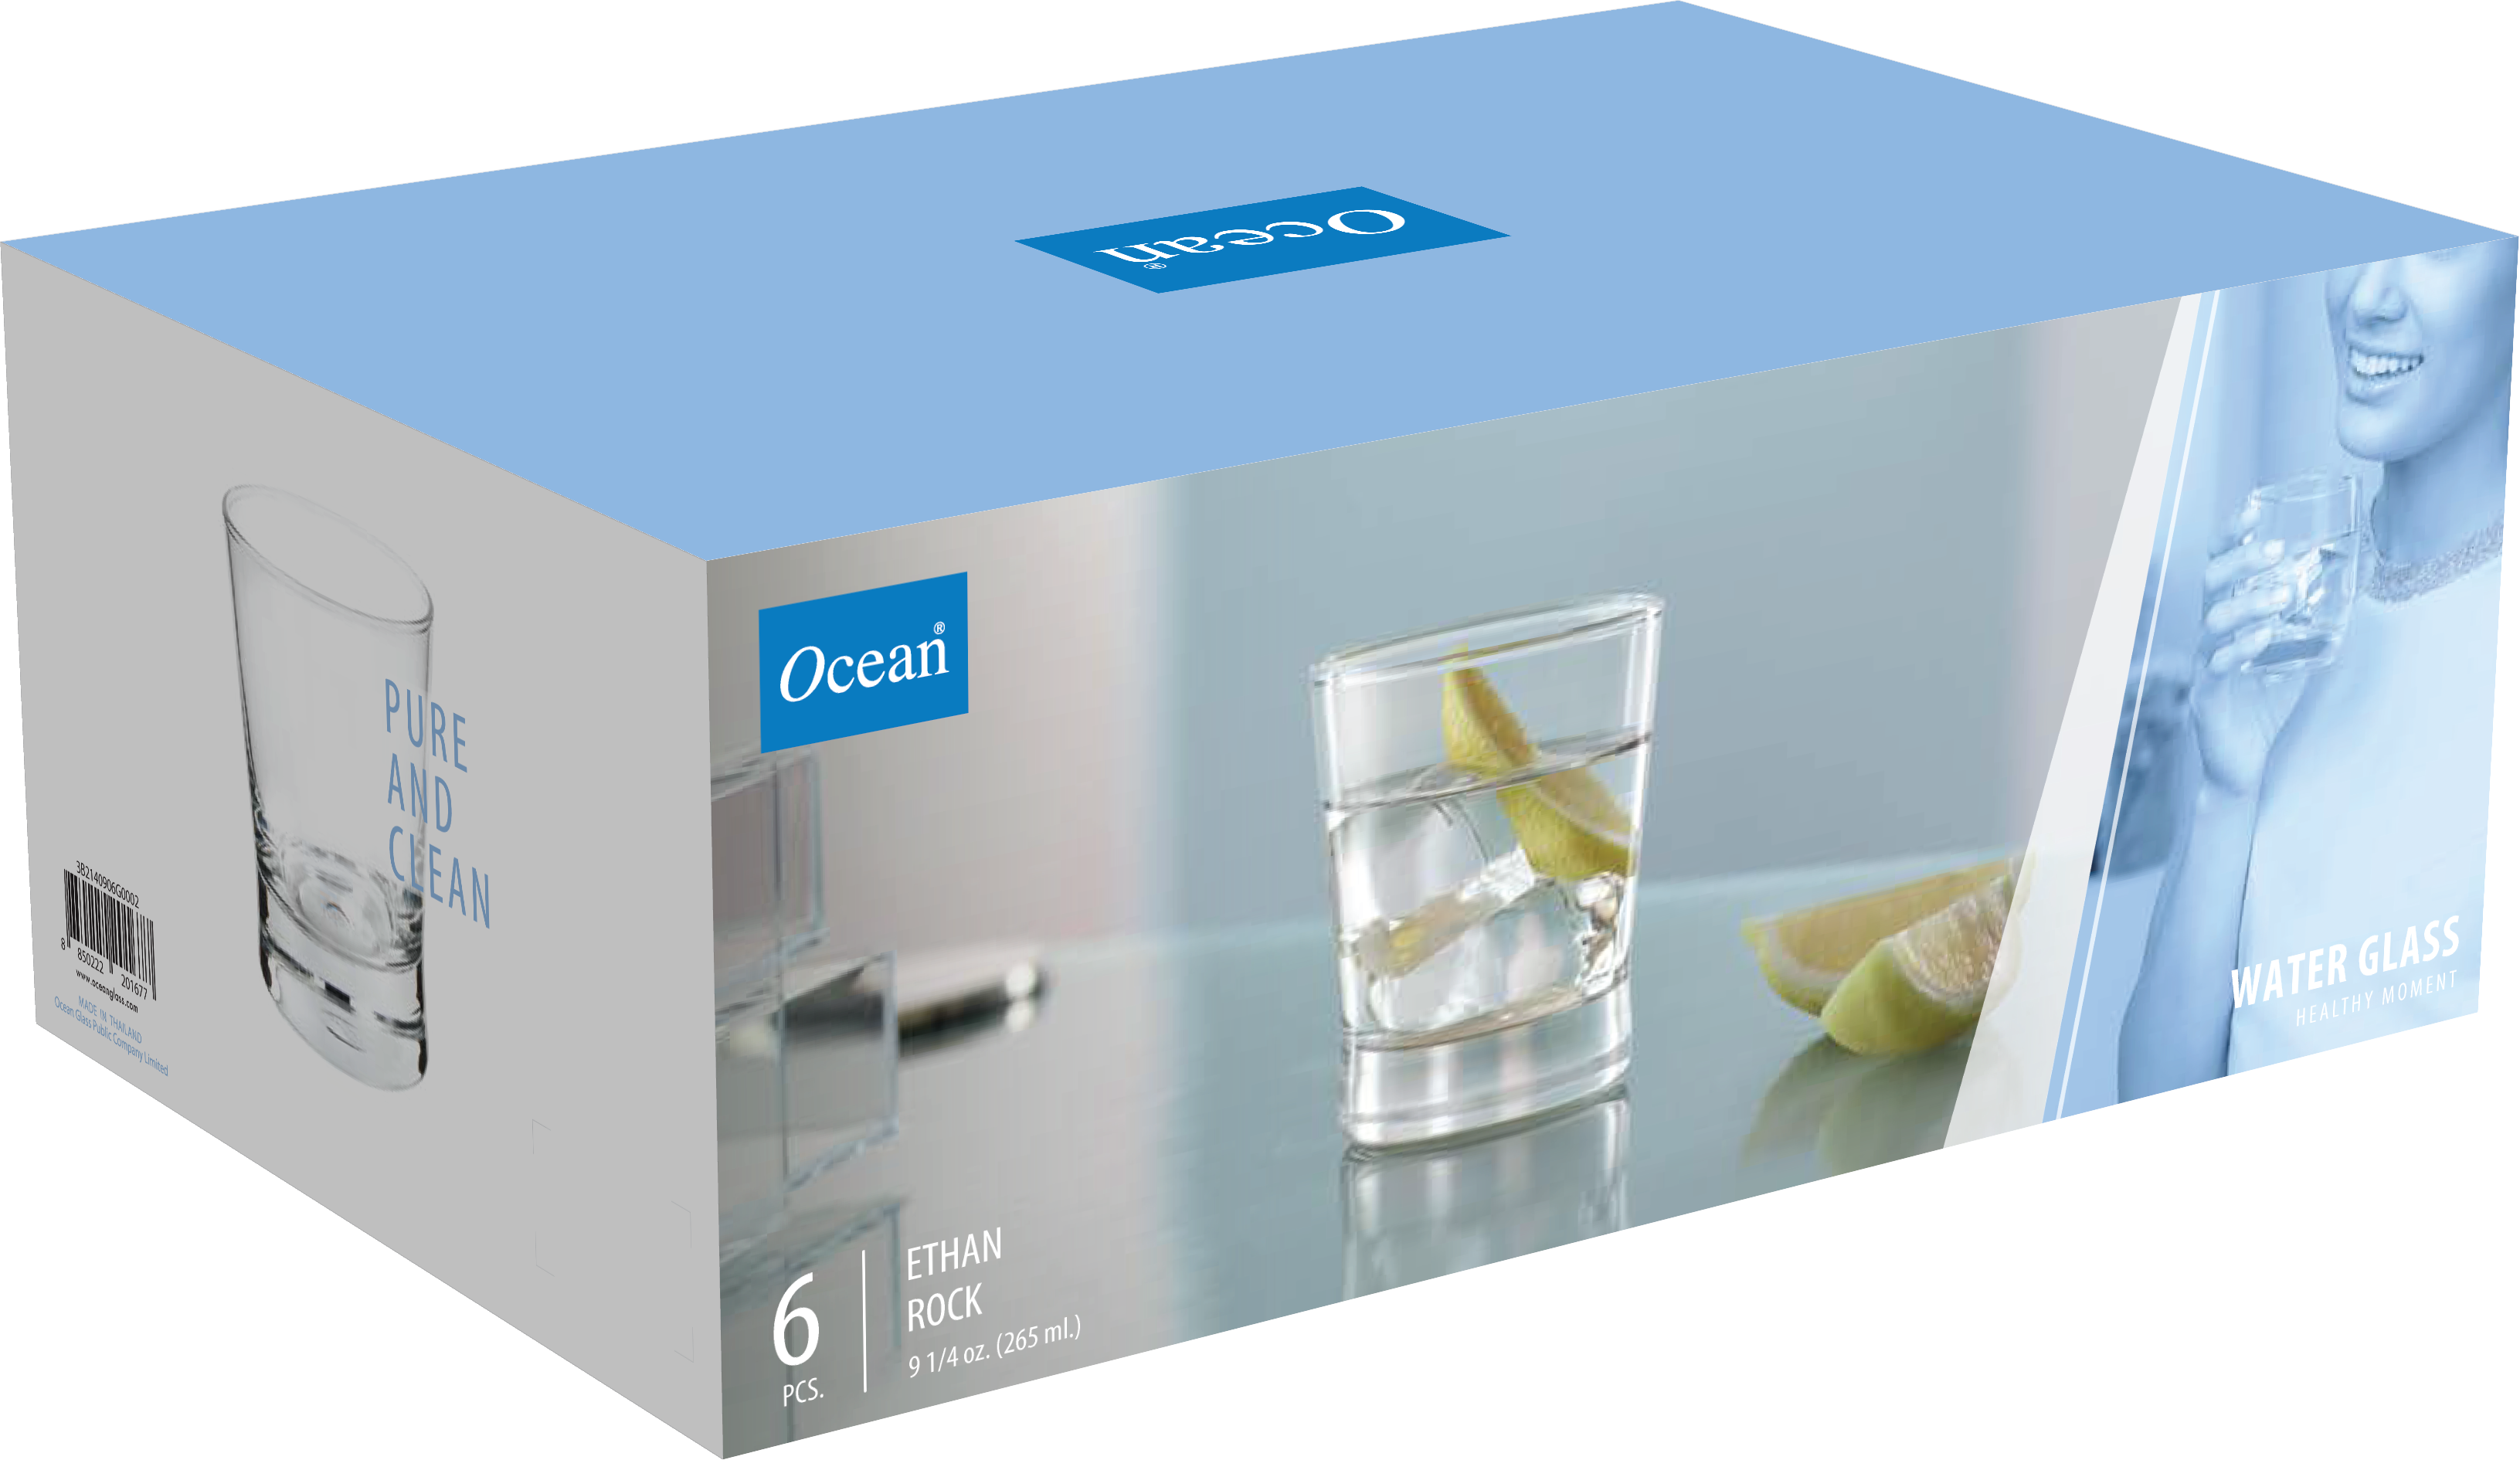 Ocean Ethan Rock, 265 ml (Set of 6 Pcs)